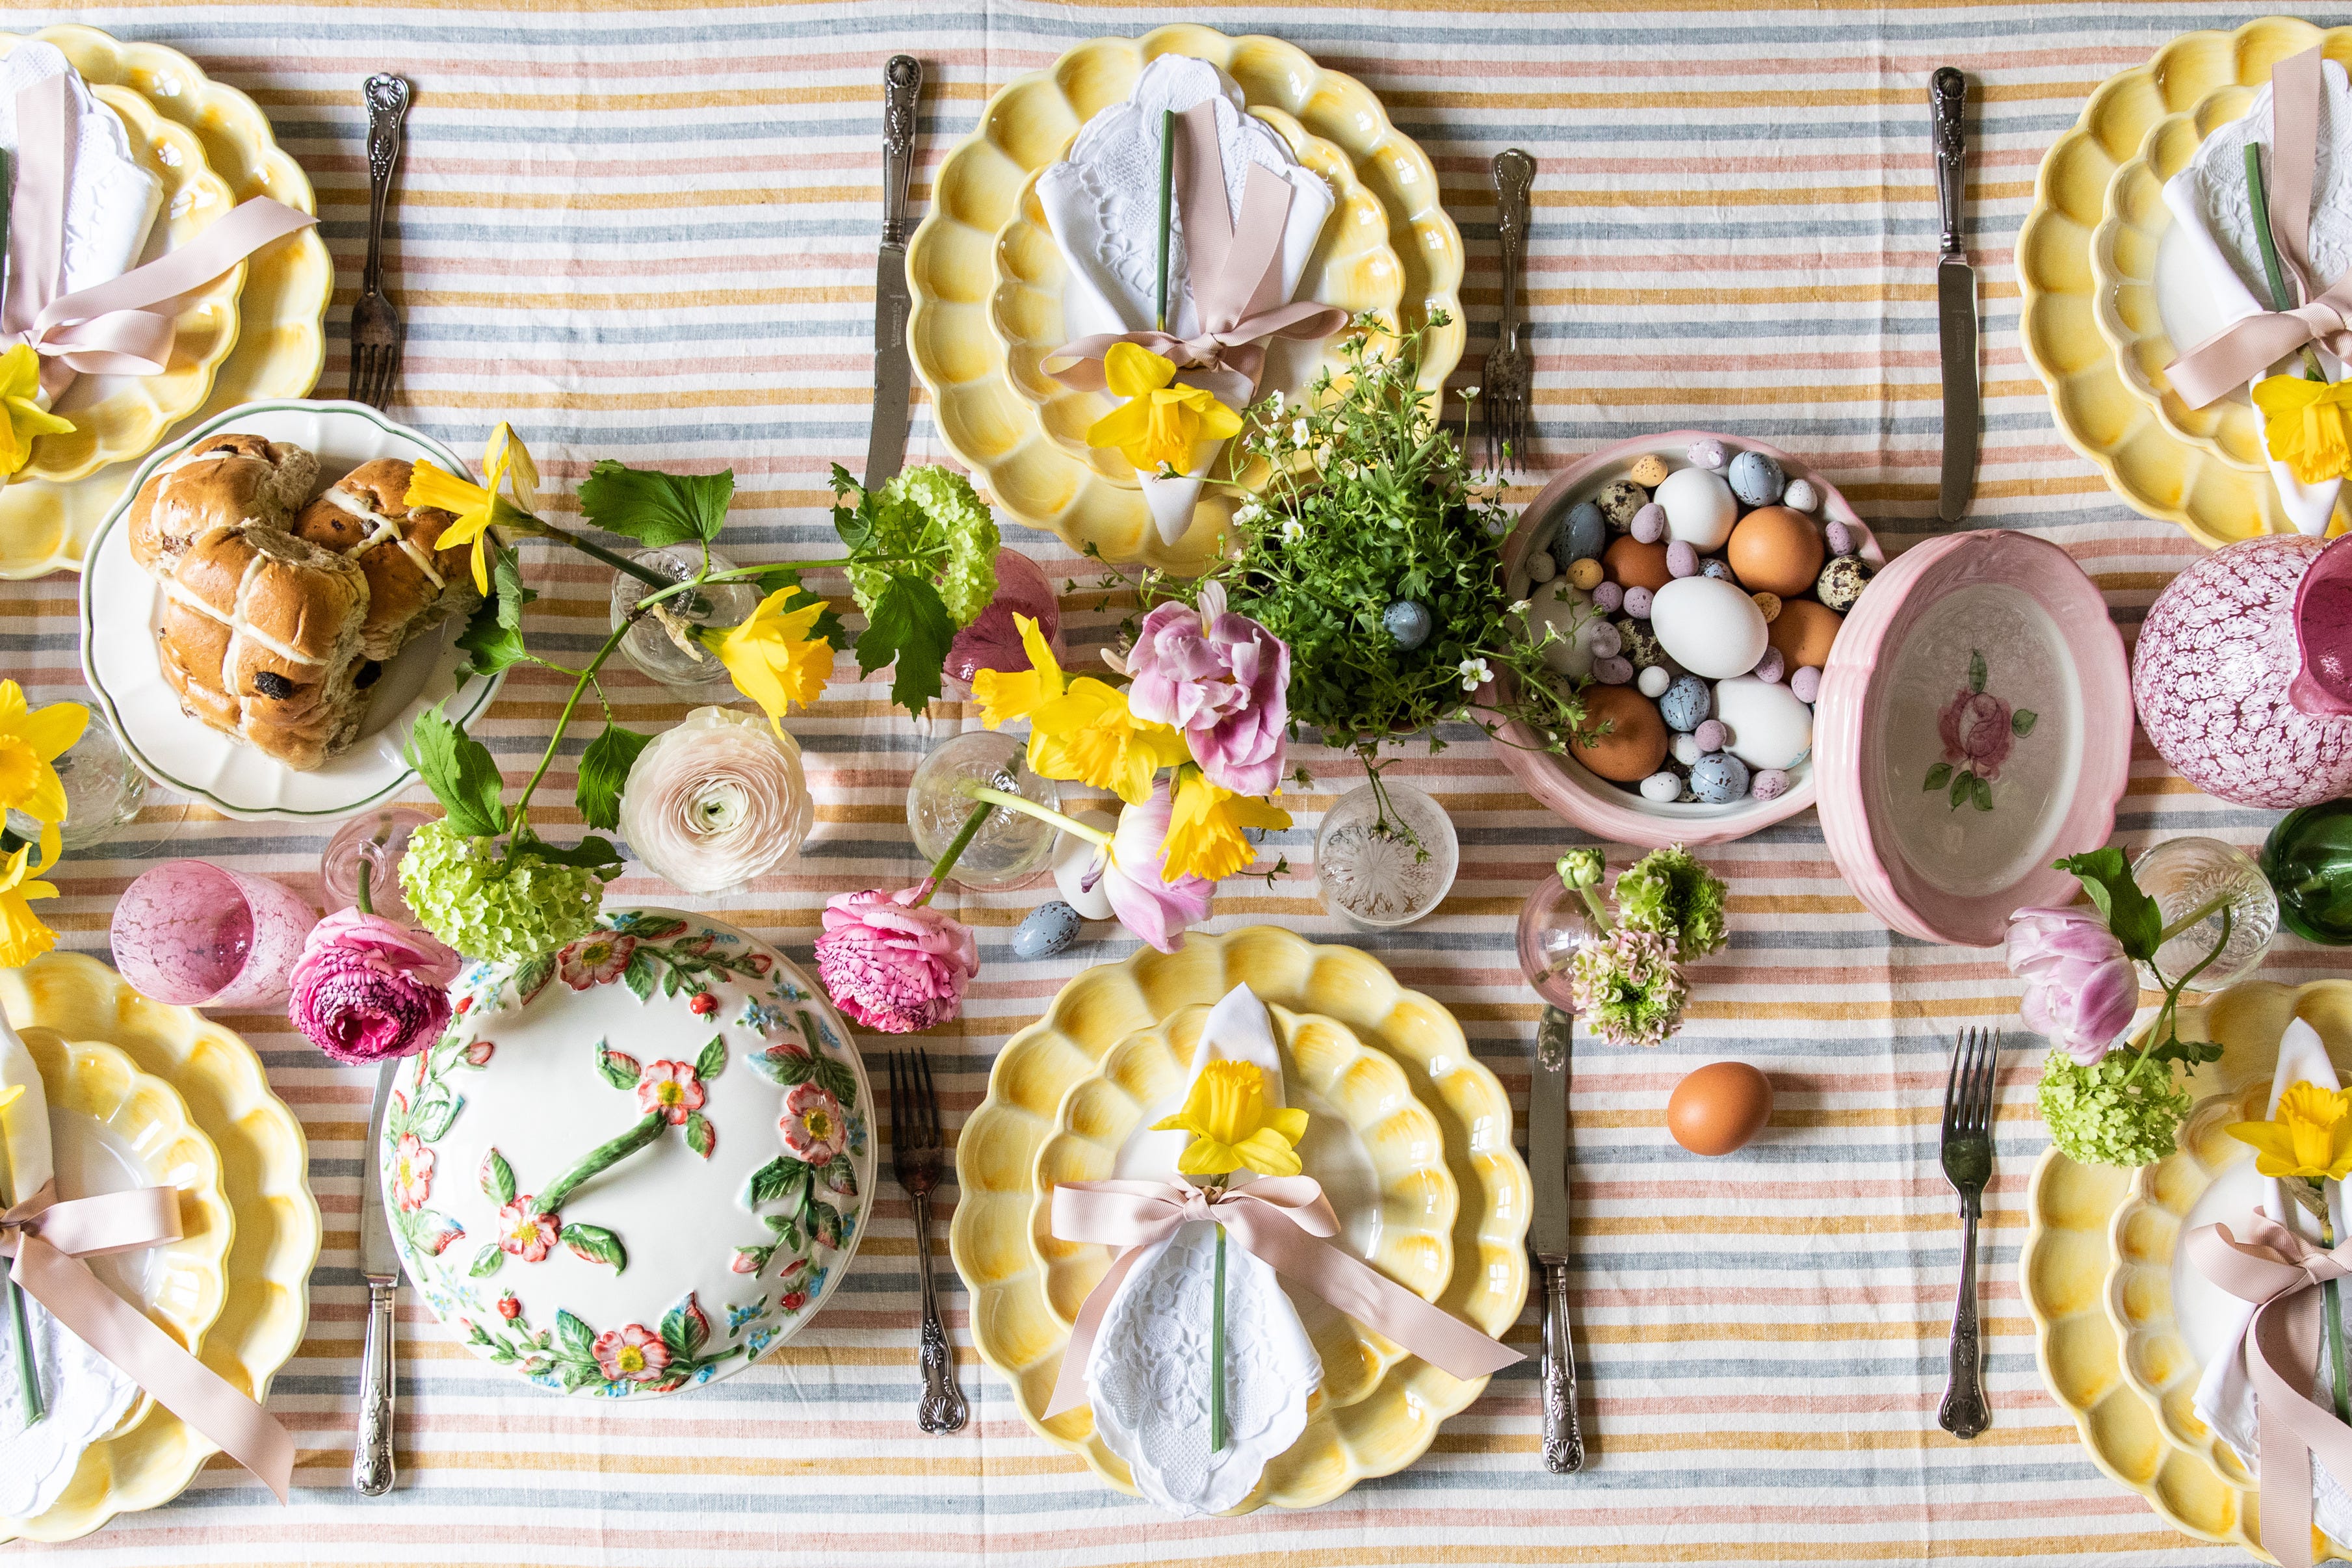 62 Designer-Approved Easter Table Decor Ideas